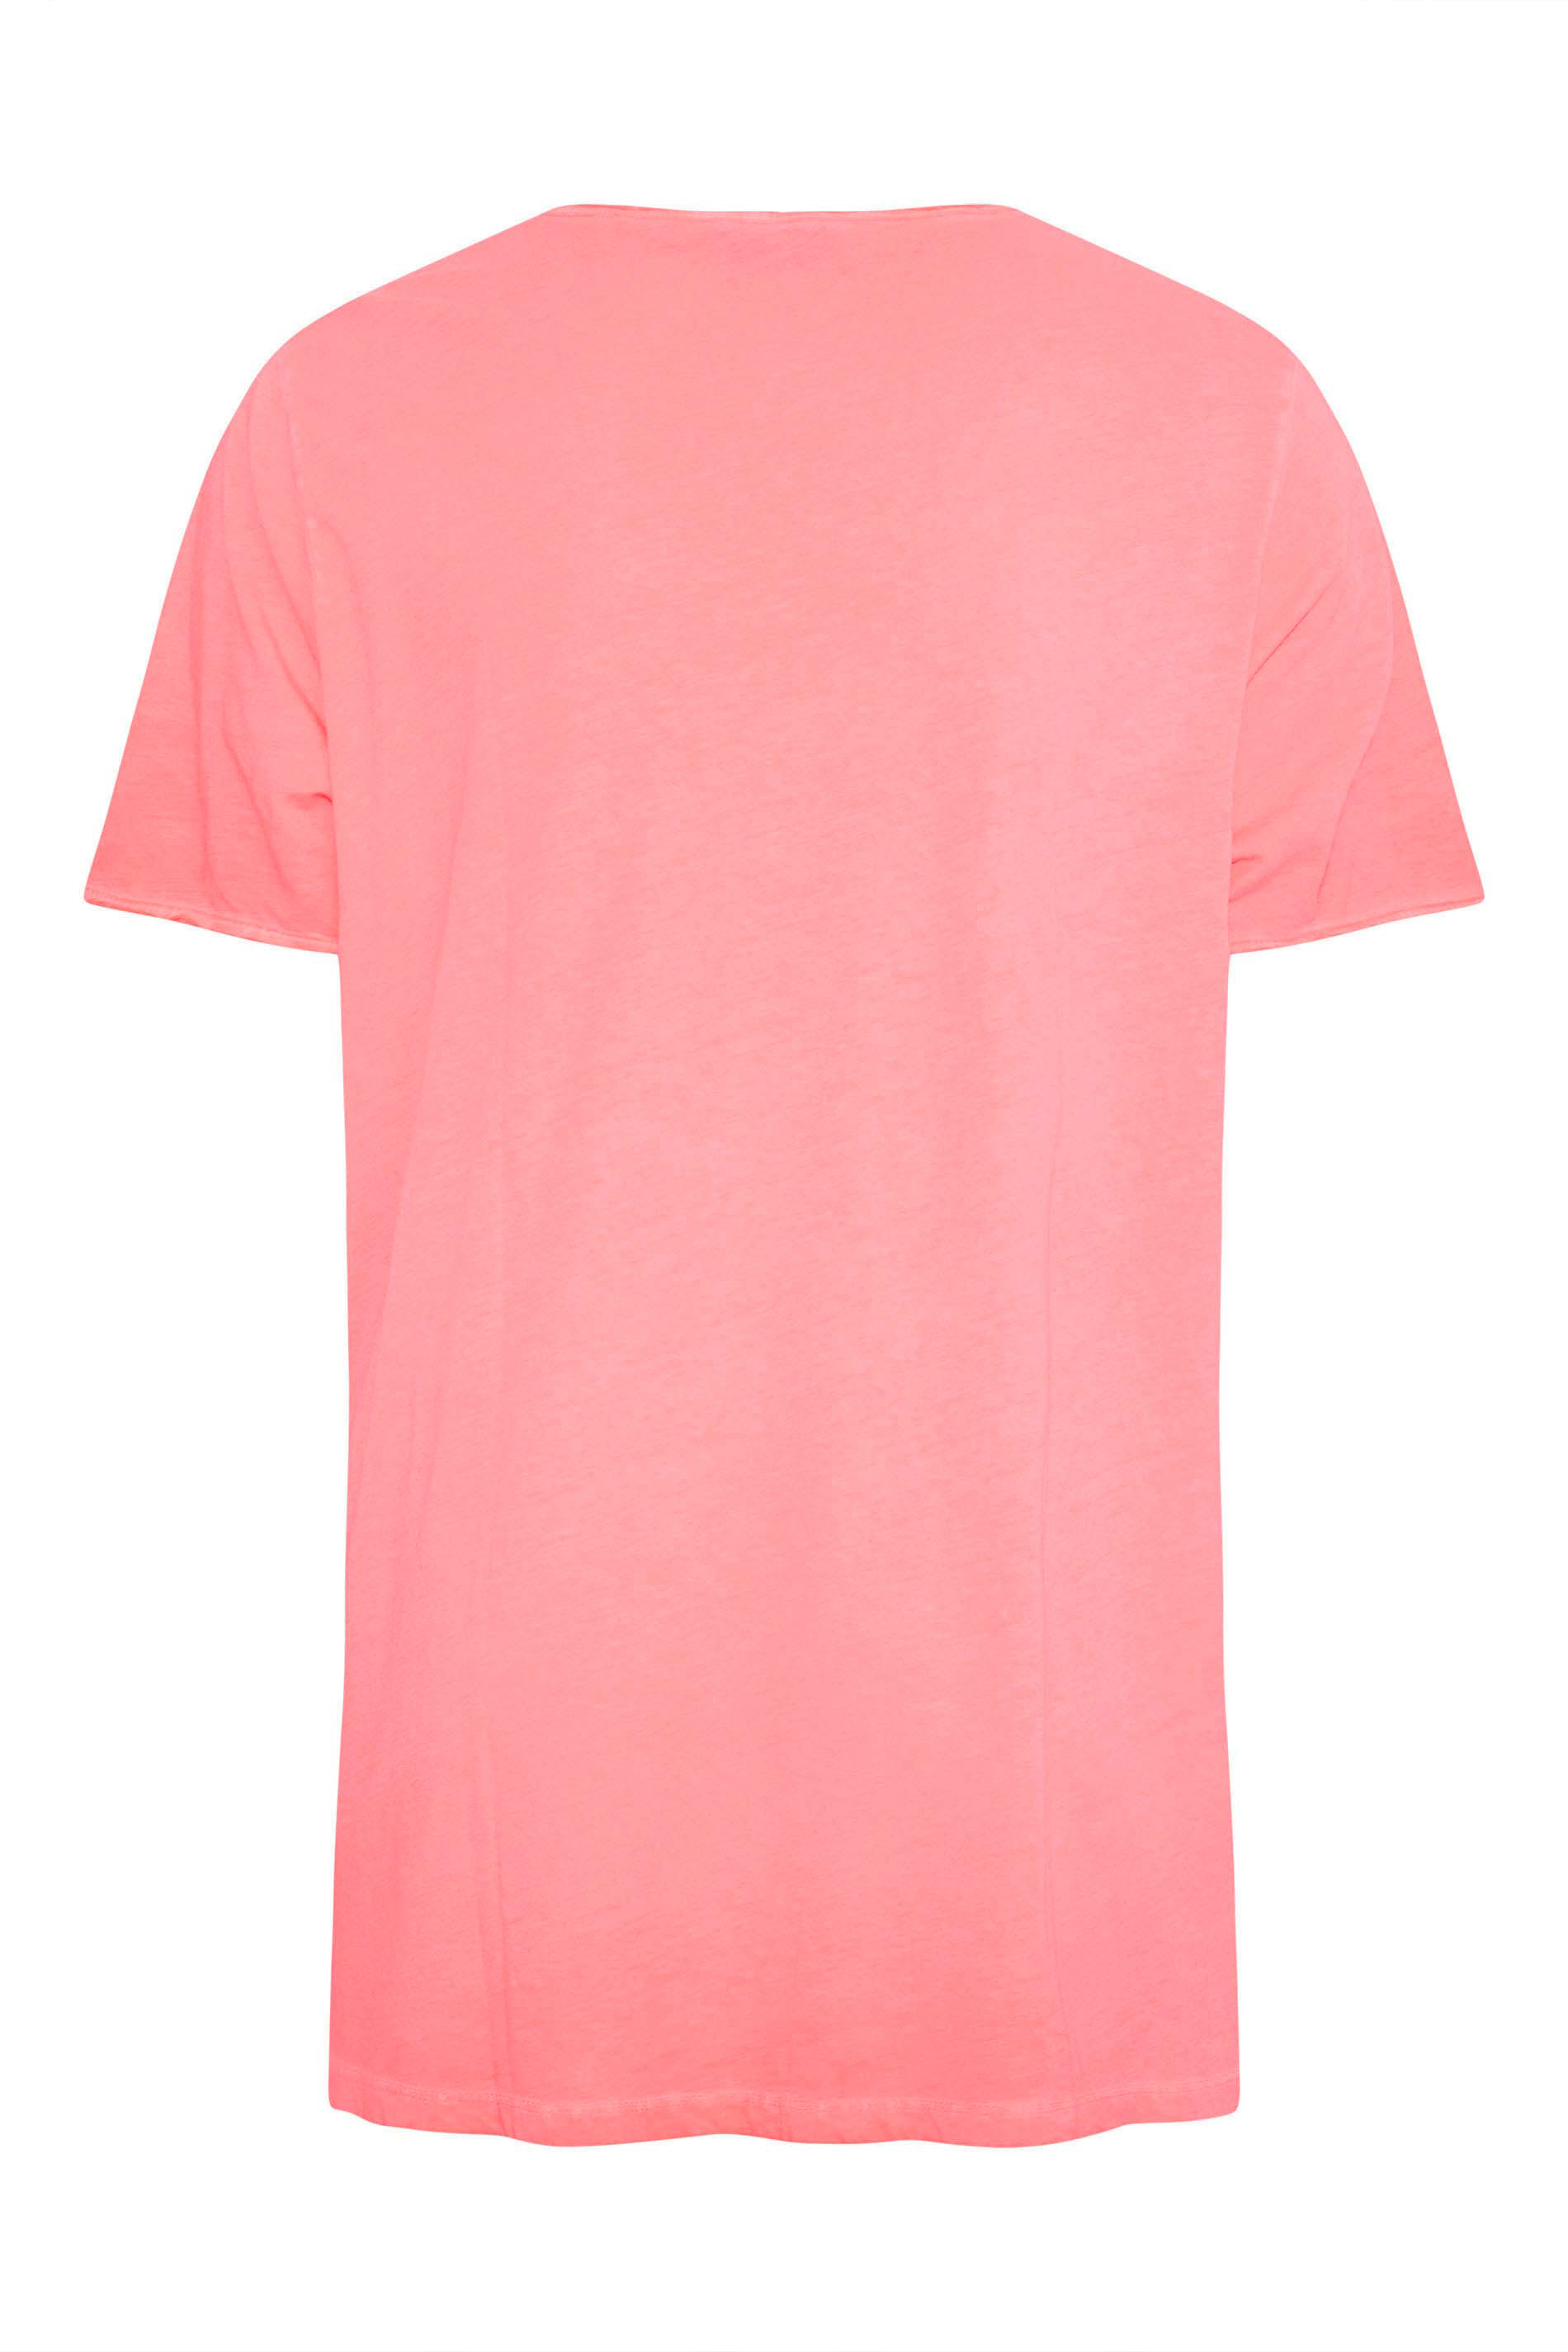 Grande taille  Tops Grande taille  T-Shirts | Curve Pink 'California Dream' Slogan T-Shirt - TU11591